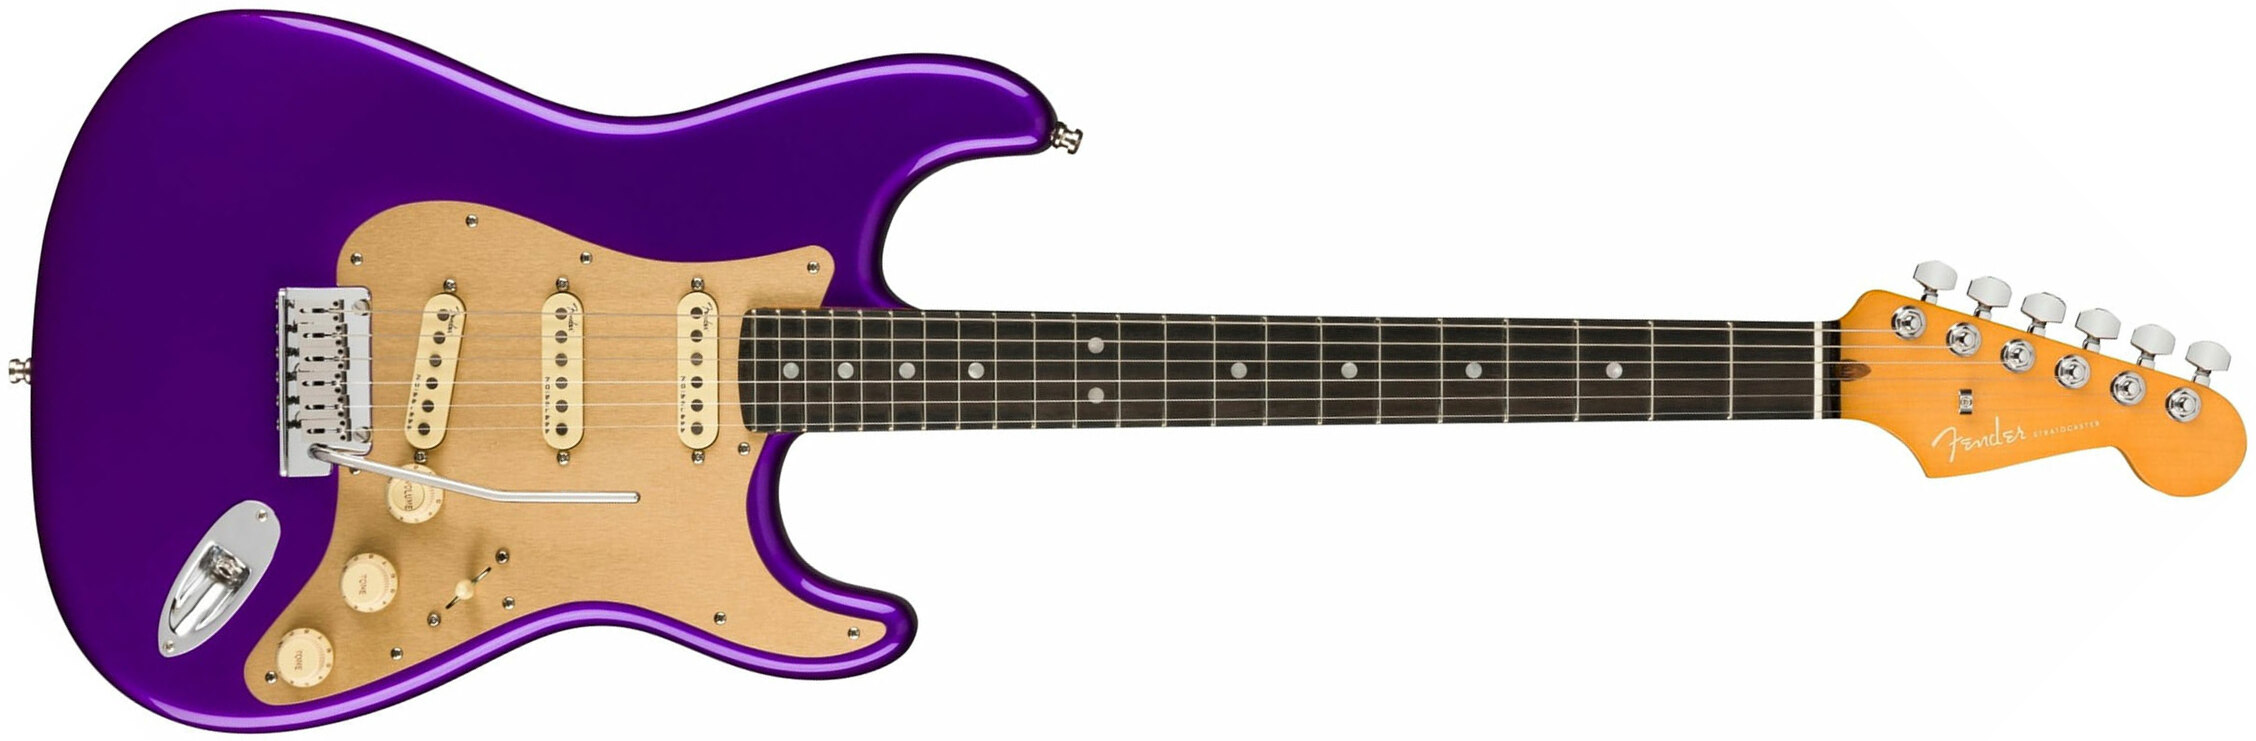 Fender Strat American Ultra Ltd Usa 3s Trem Eb - Plum Metallic - Guitarra eléctrica con forma de str. - Main picture